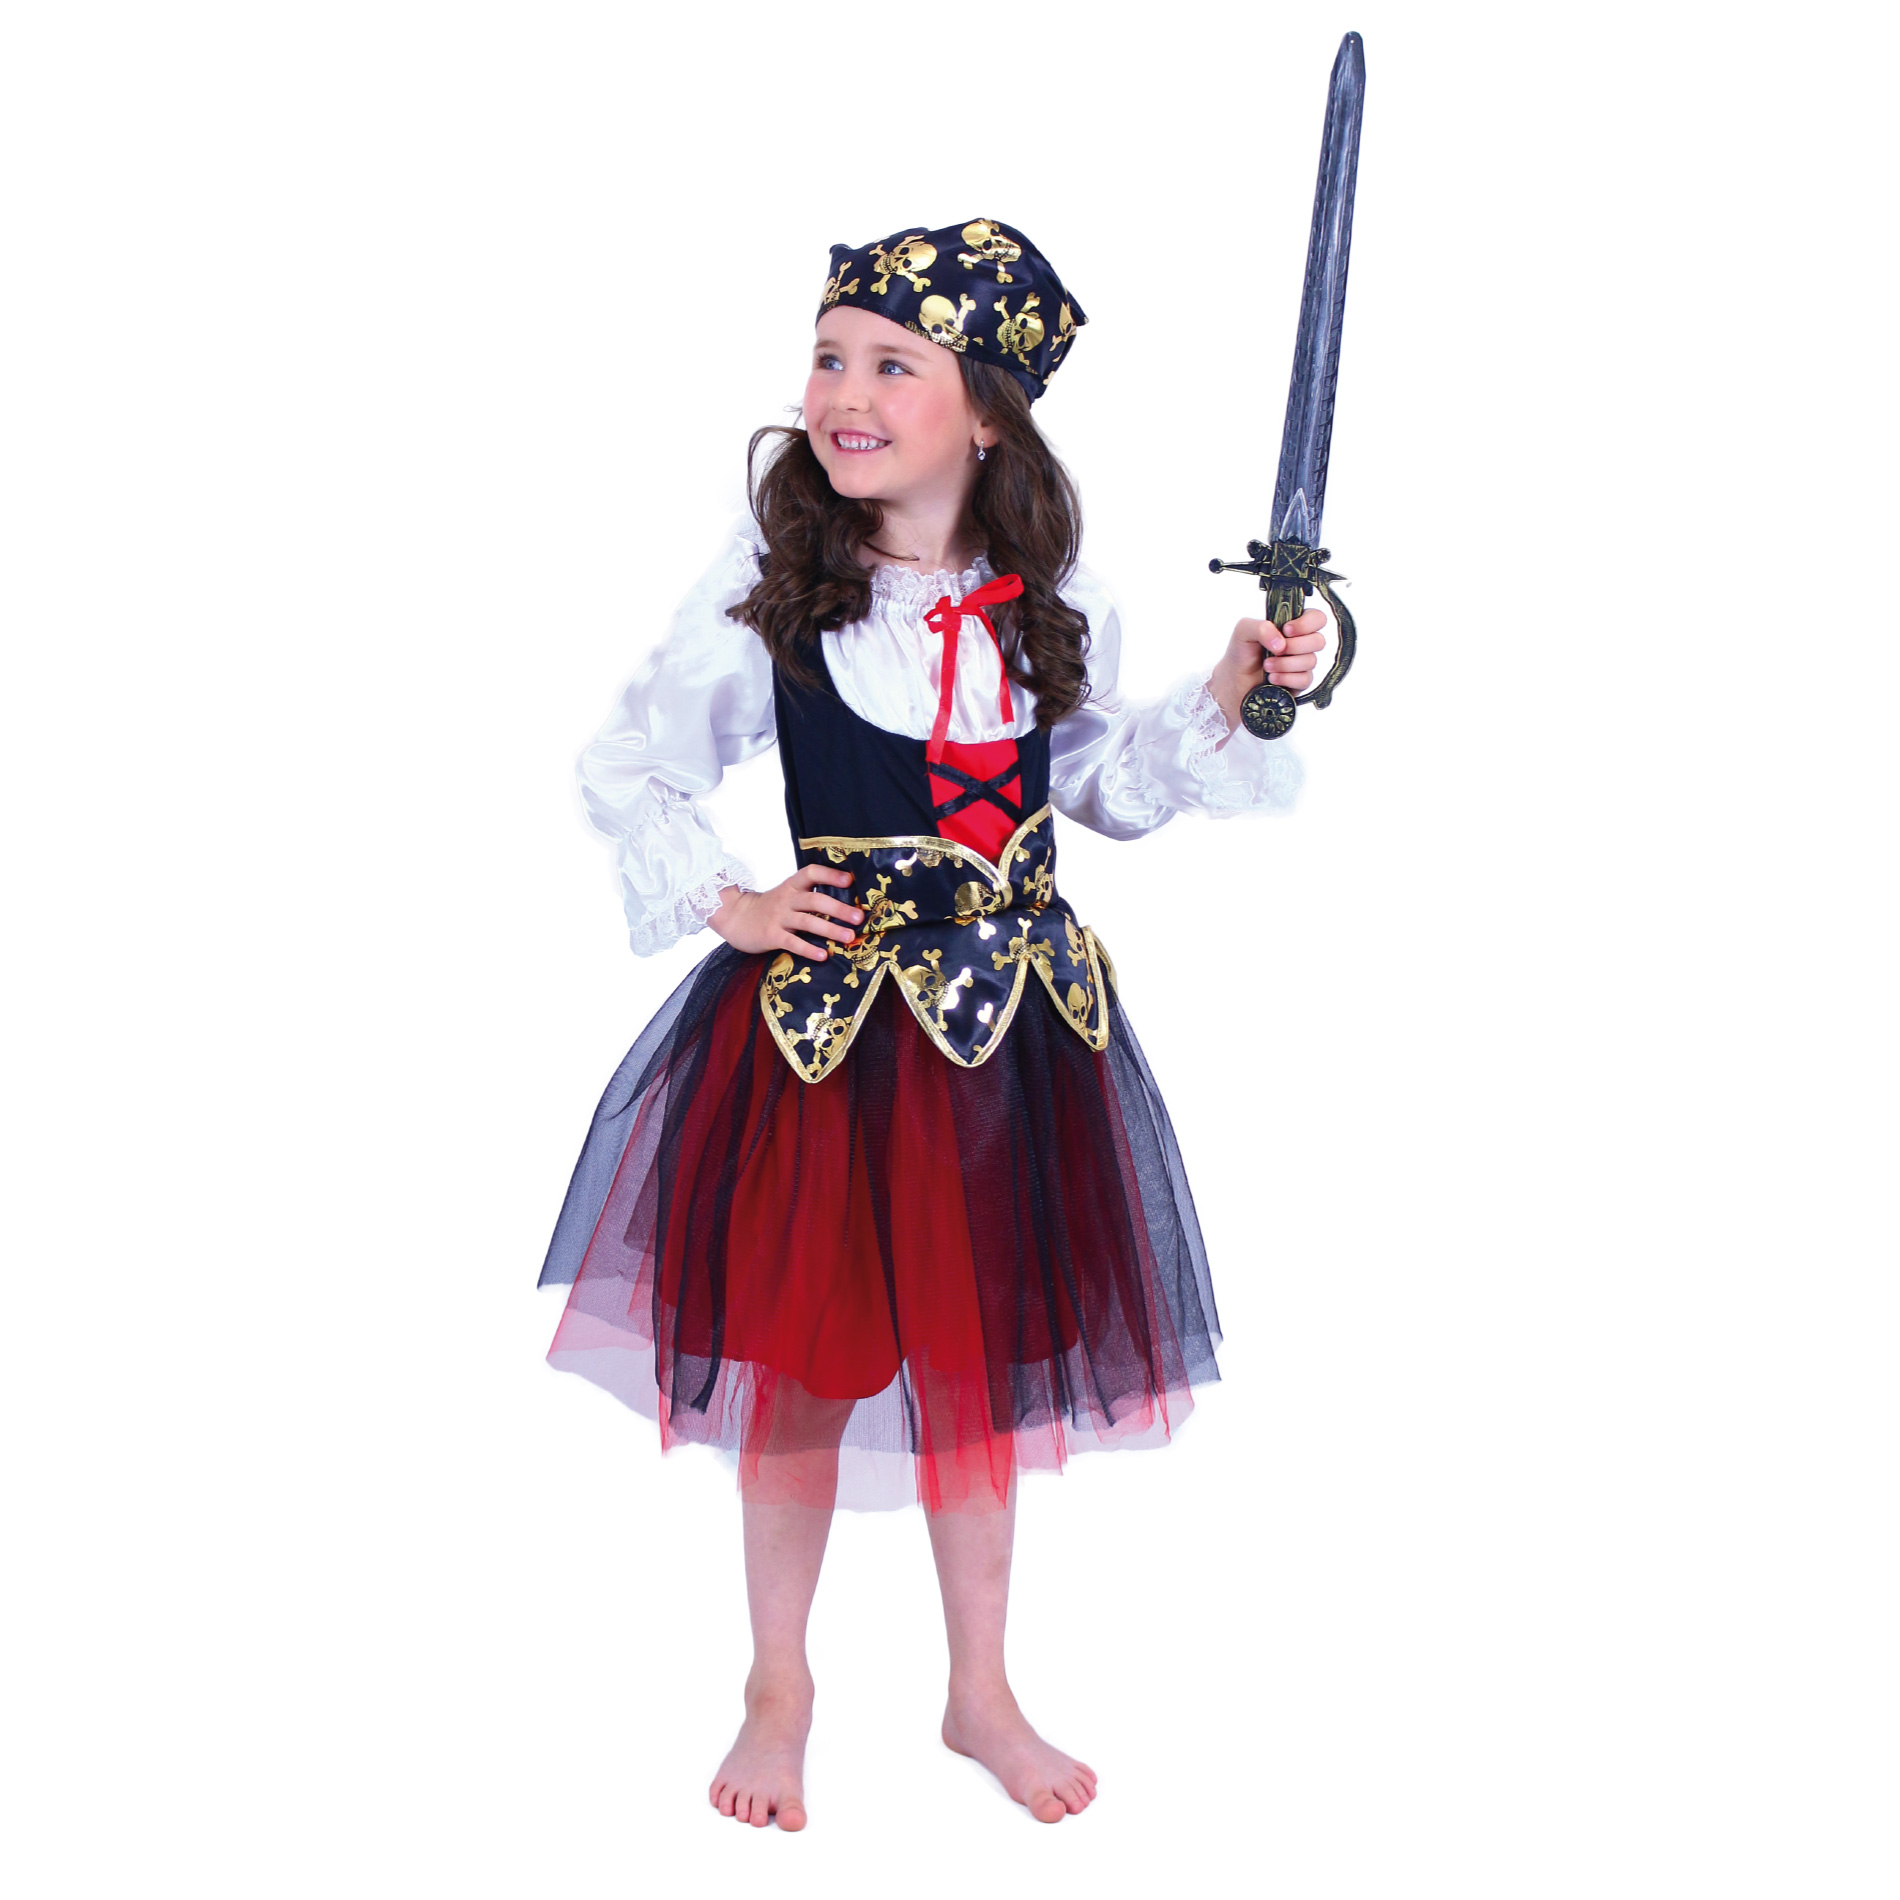 Dětský kostým pirátka (S)